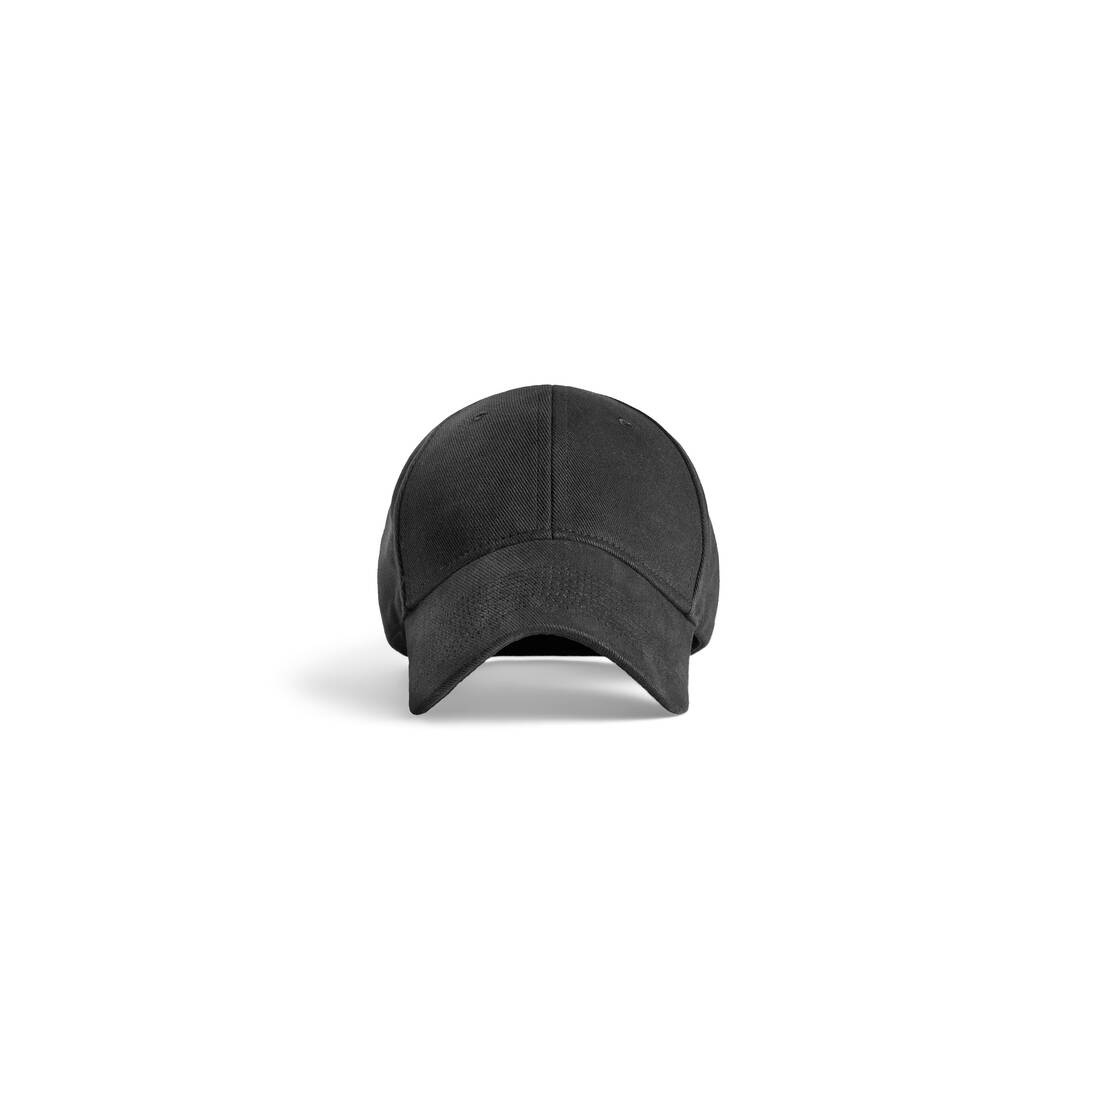 Stencil Type Cap in Black/grey - 1